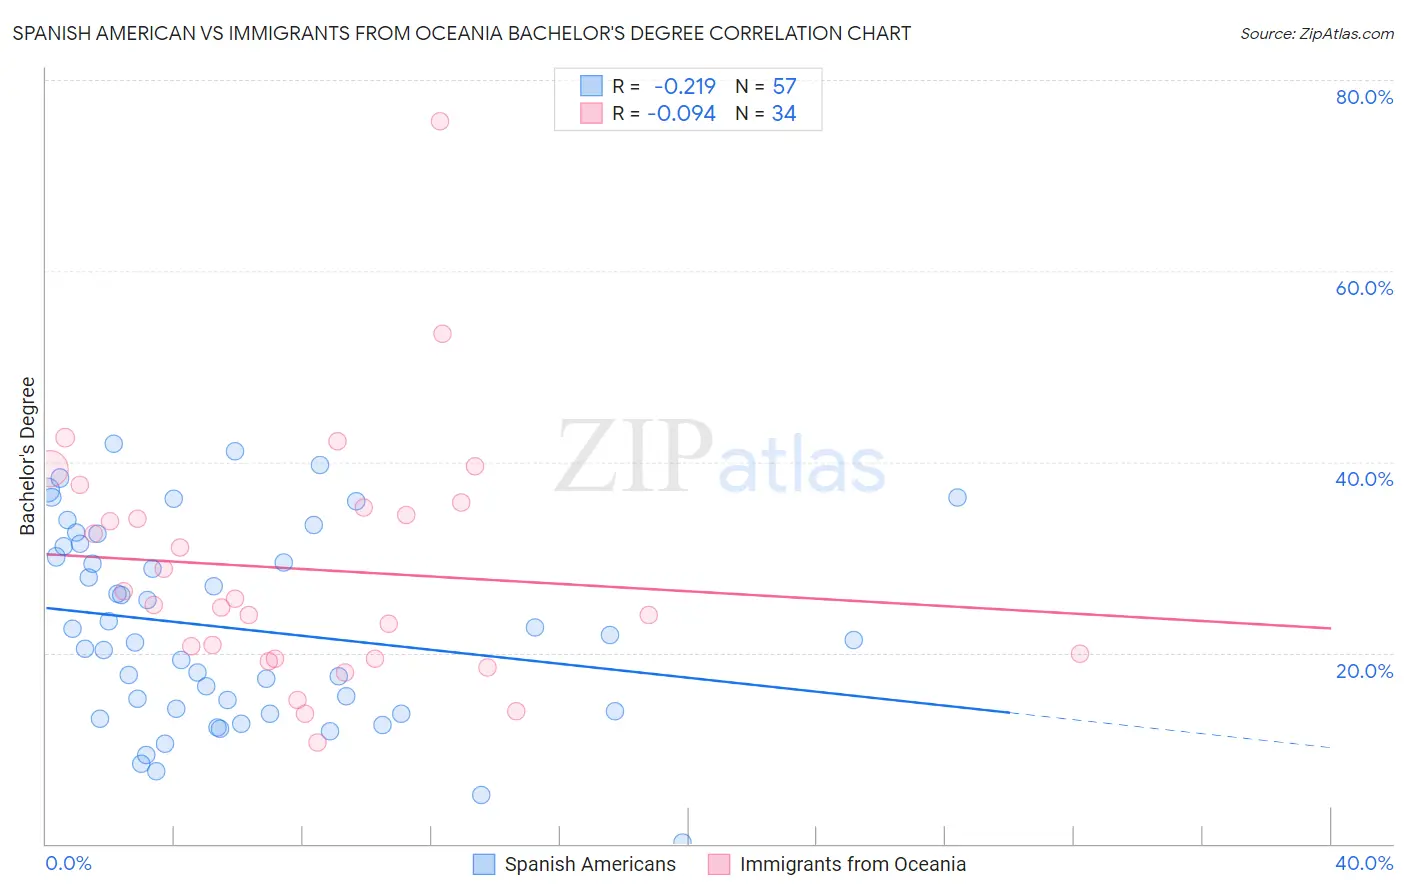 Spanish American vs Immigrants from Oceania Bachelor's Degree